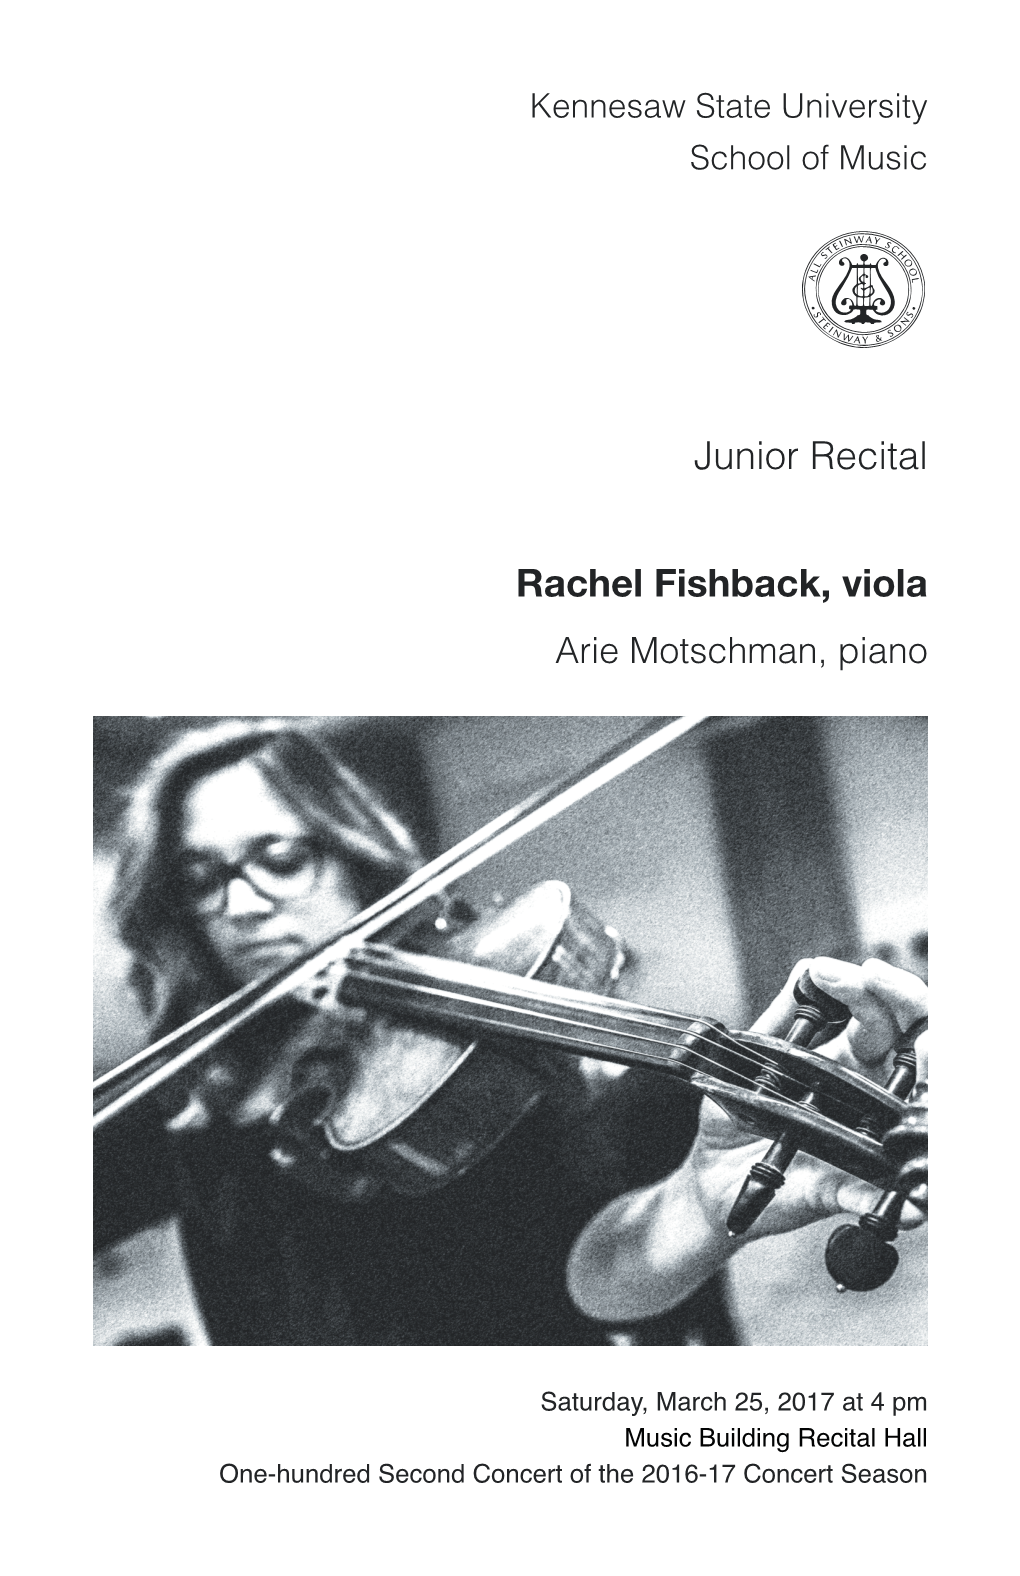 Junior Recital: Rachel Fishback, Viola